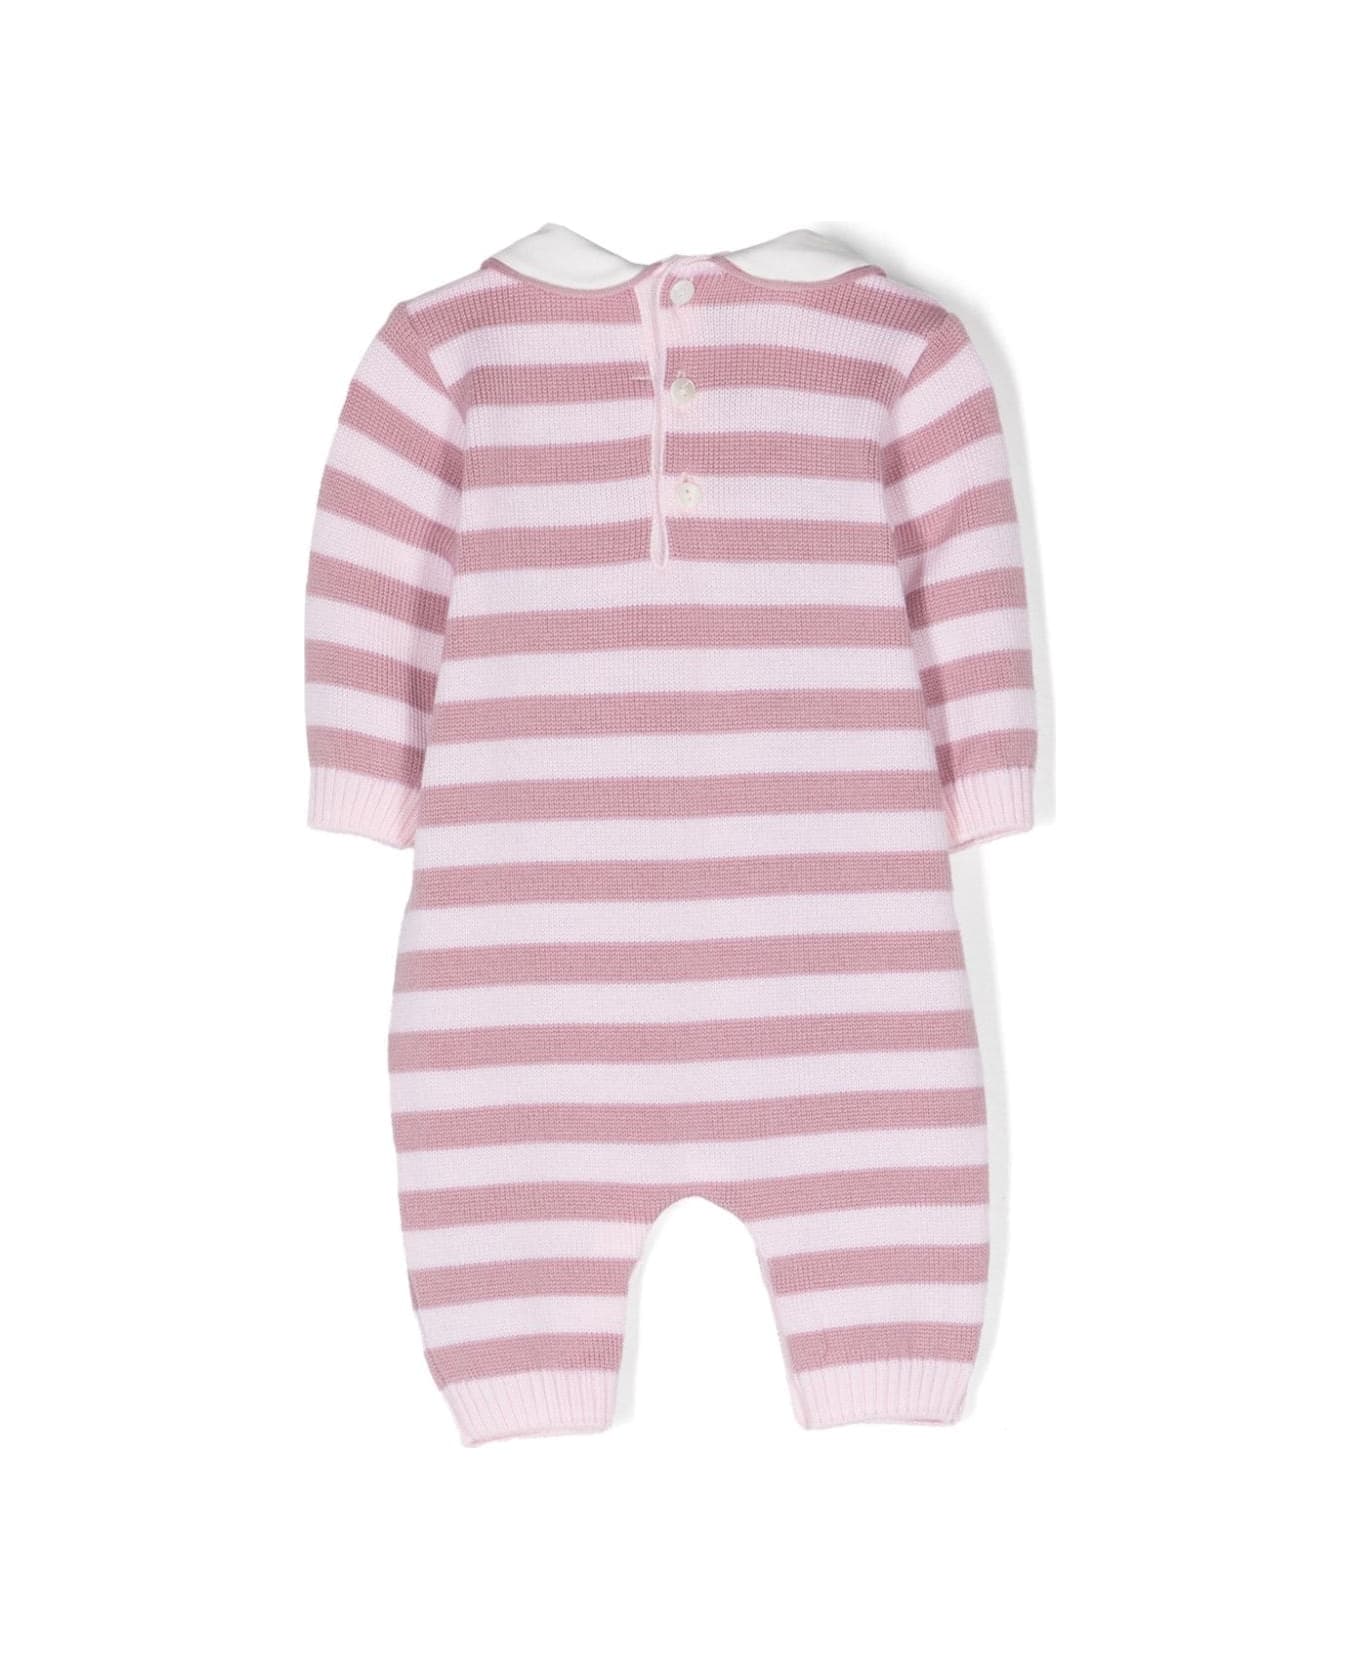 Little Bear Striped Onesie - Pink